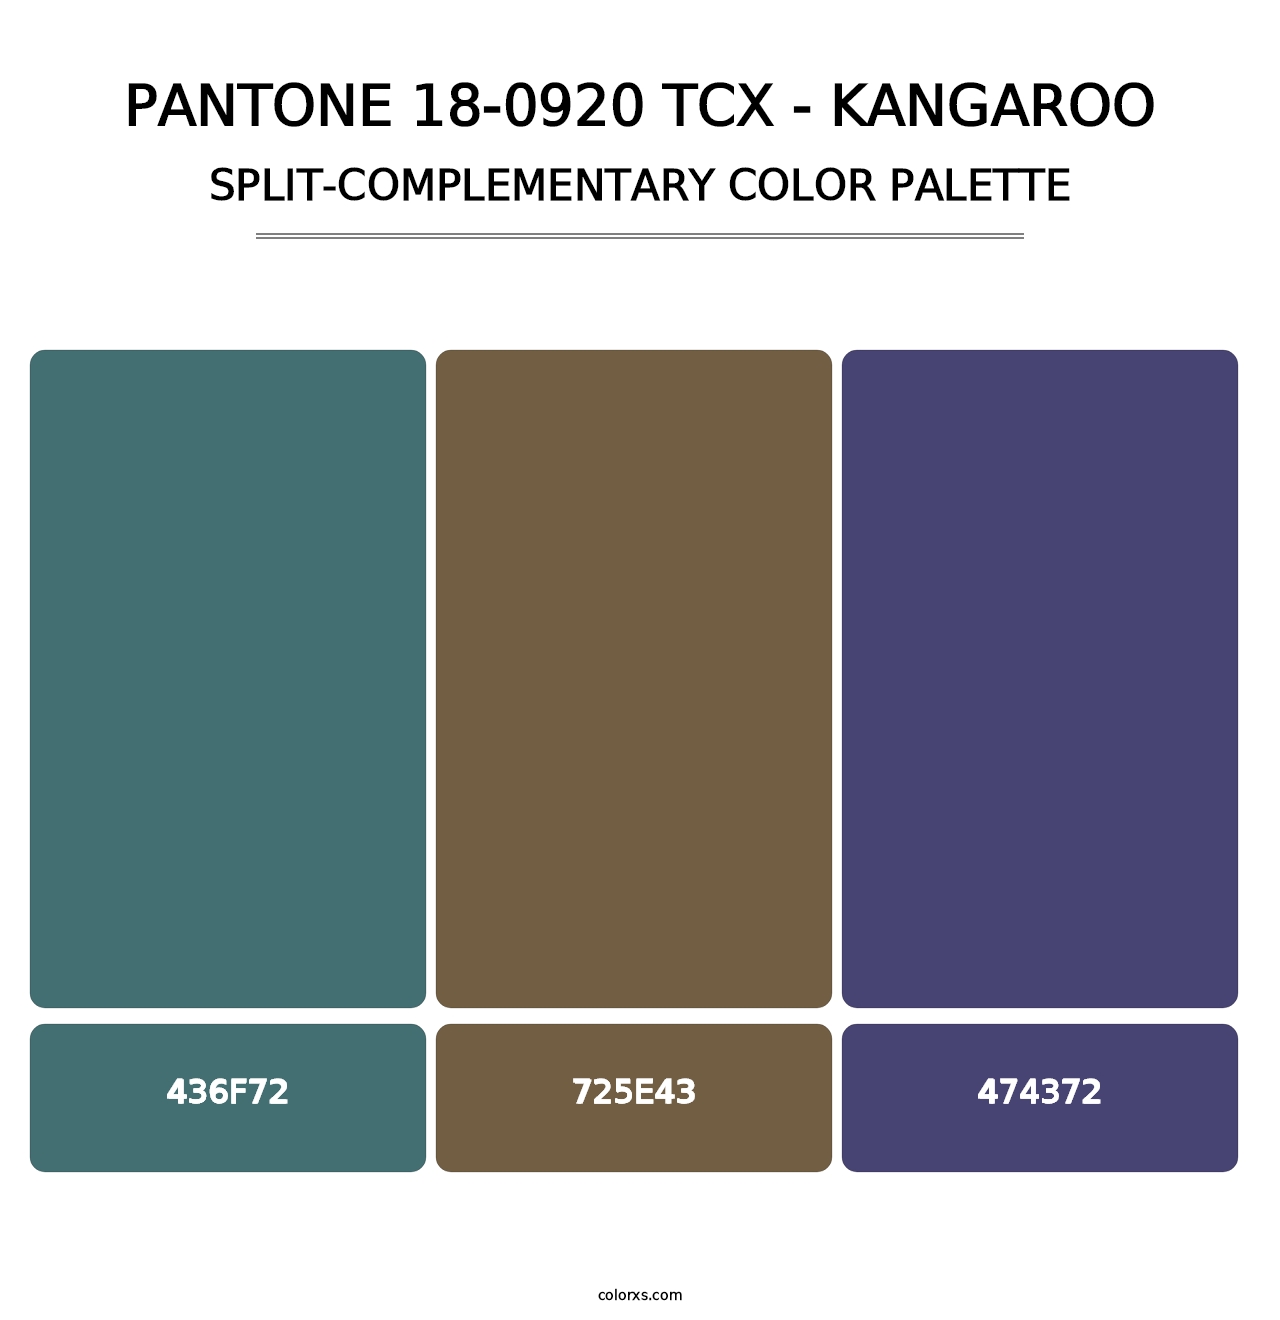 PANTONE 18-0920 TCX - Kangaroo - Split-Complementary Color Palette